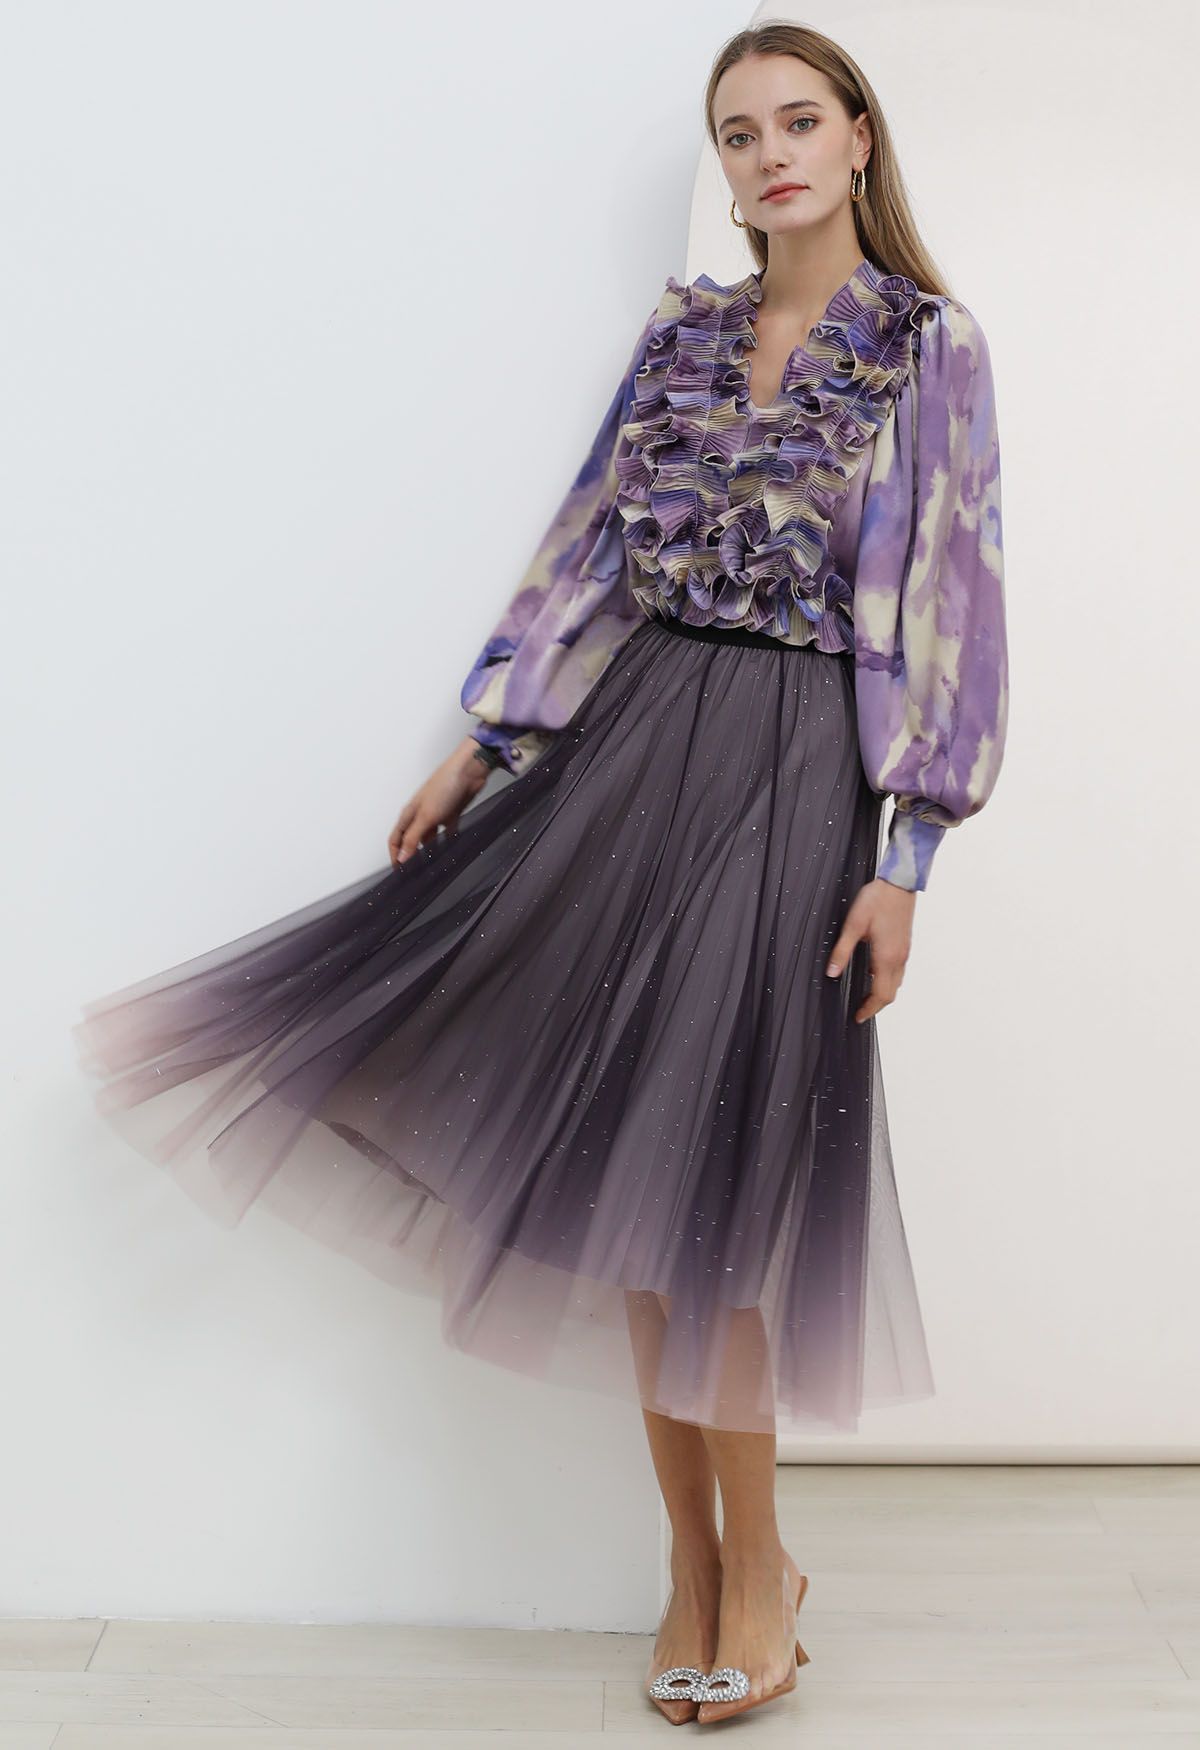 Gradient Mesh Sequined Midi Skirt in Purple